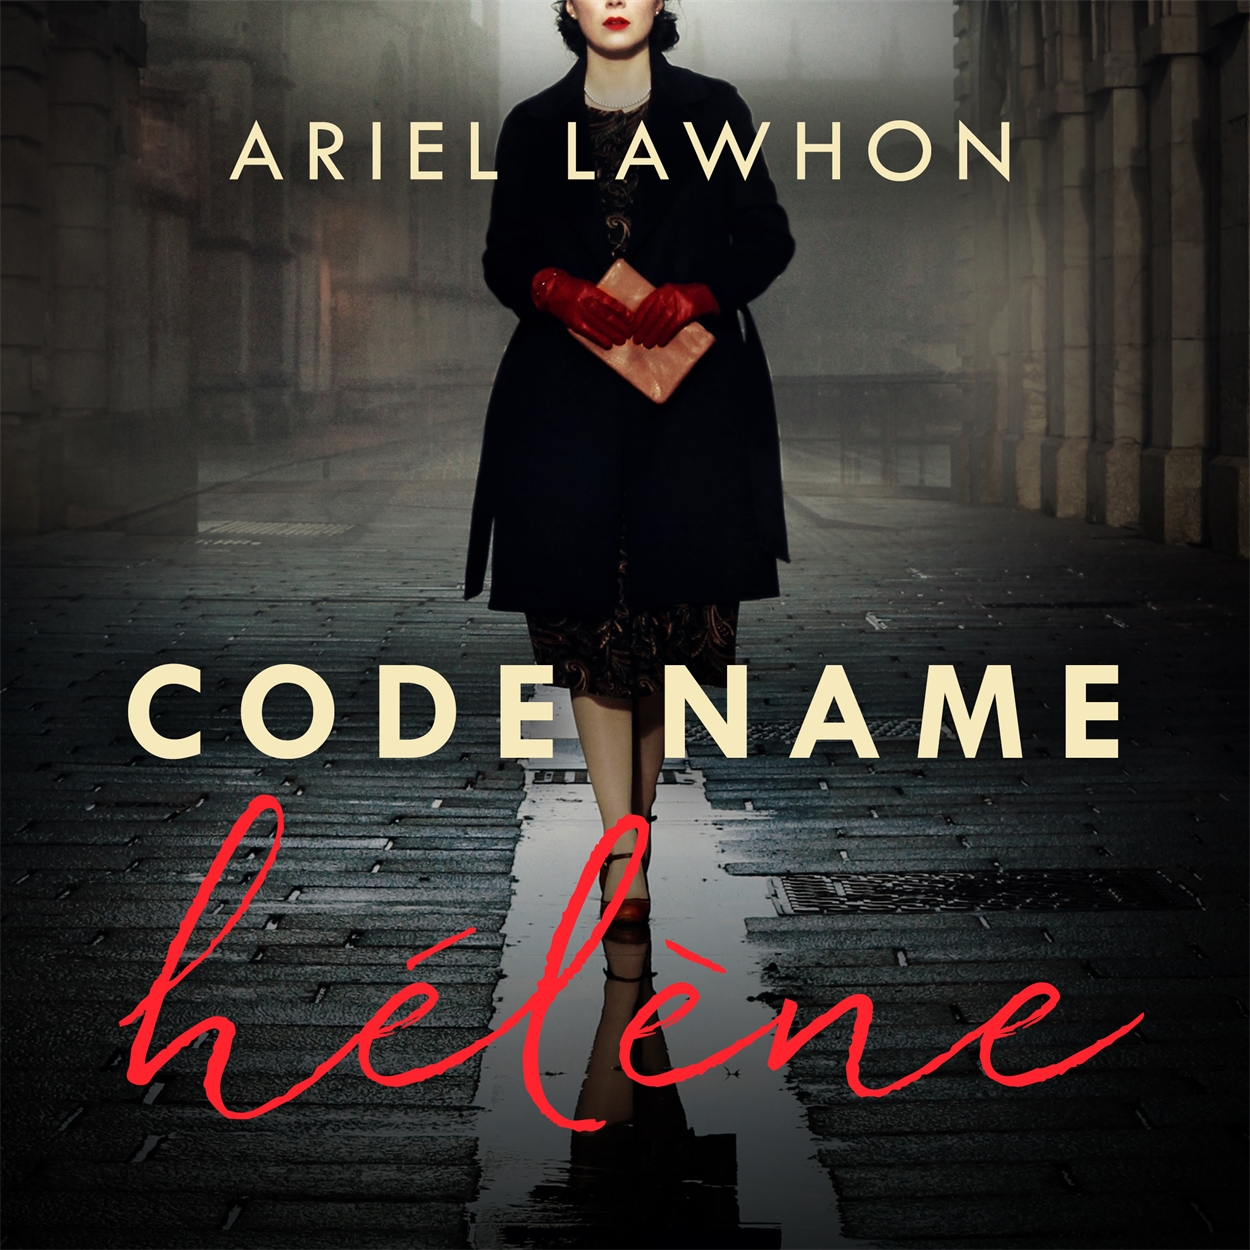 book review code name helene